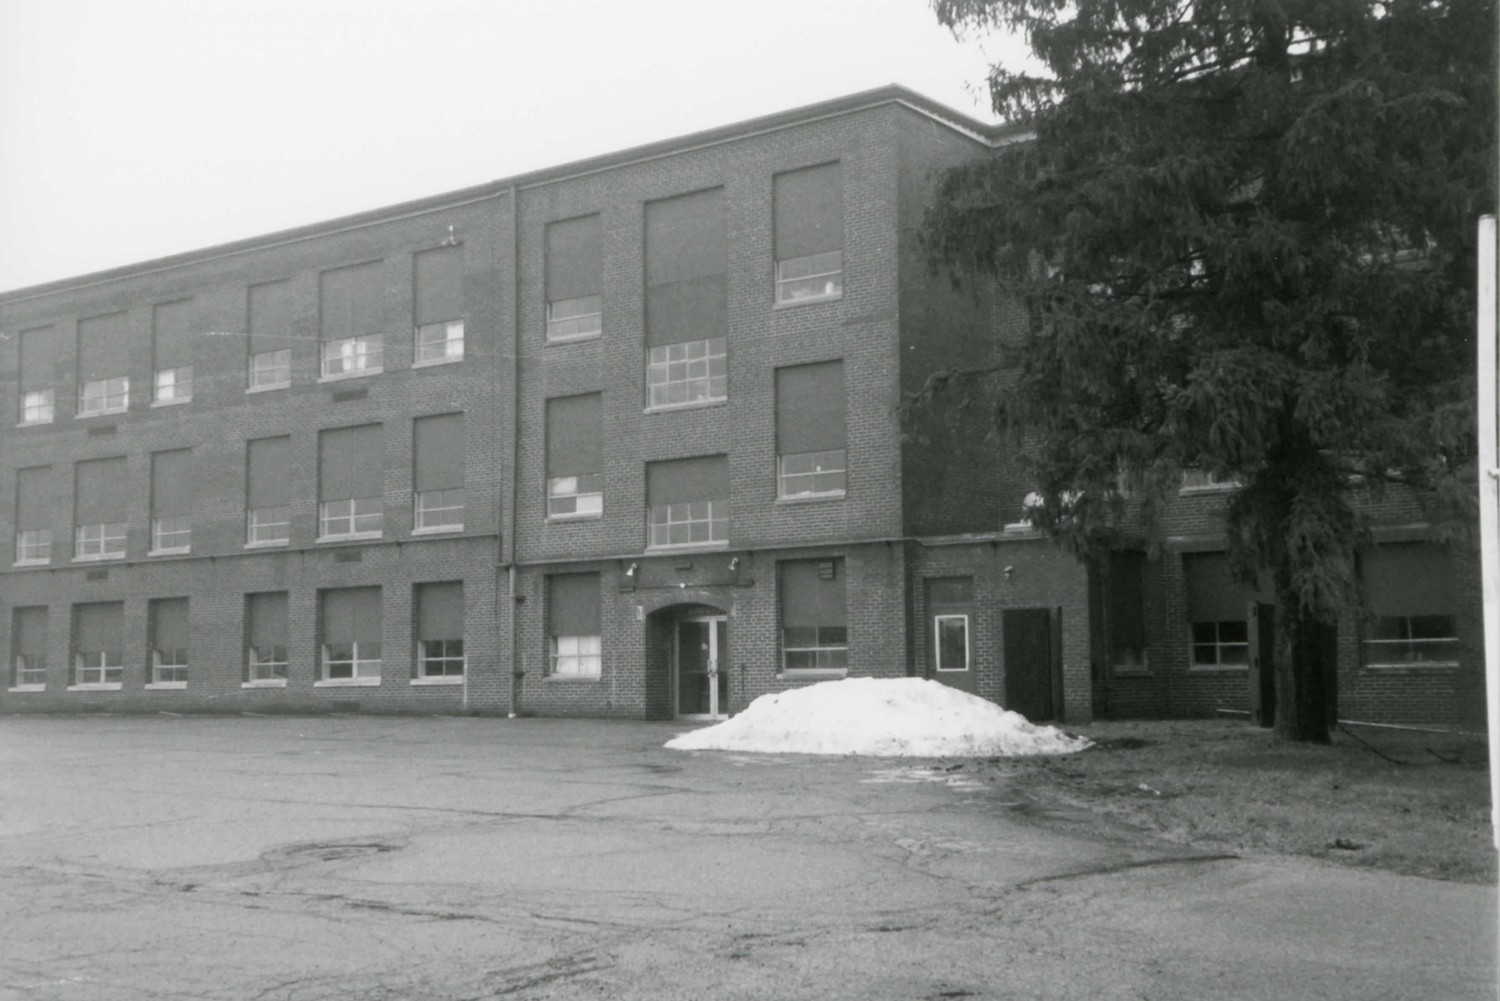 Springfield Township School, Ontario Ohio West elevation (2002)